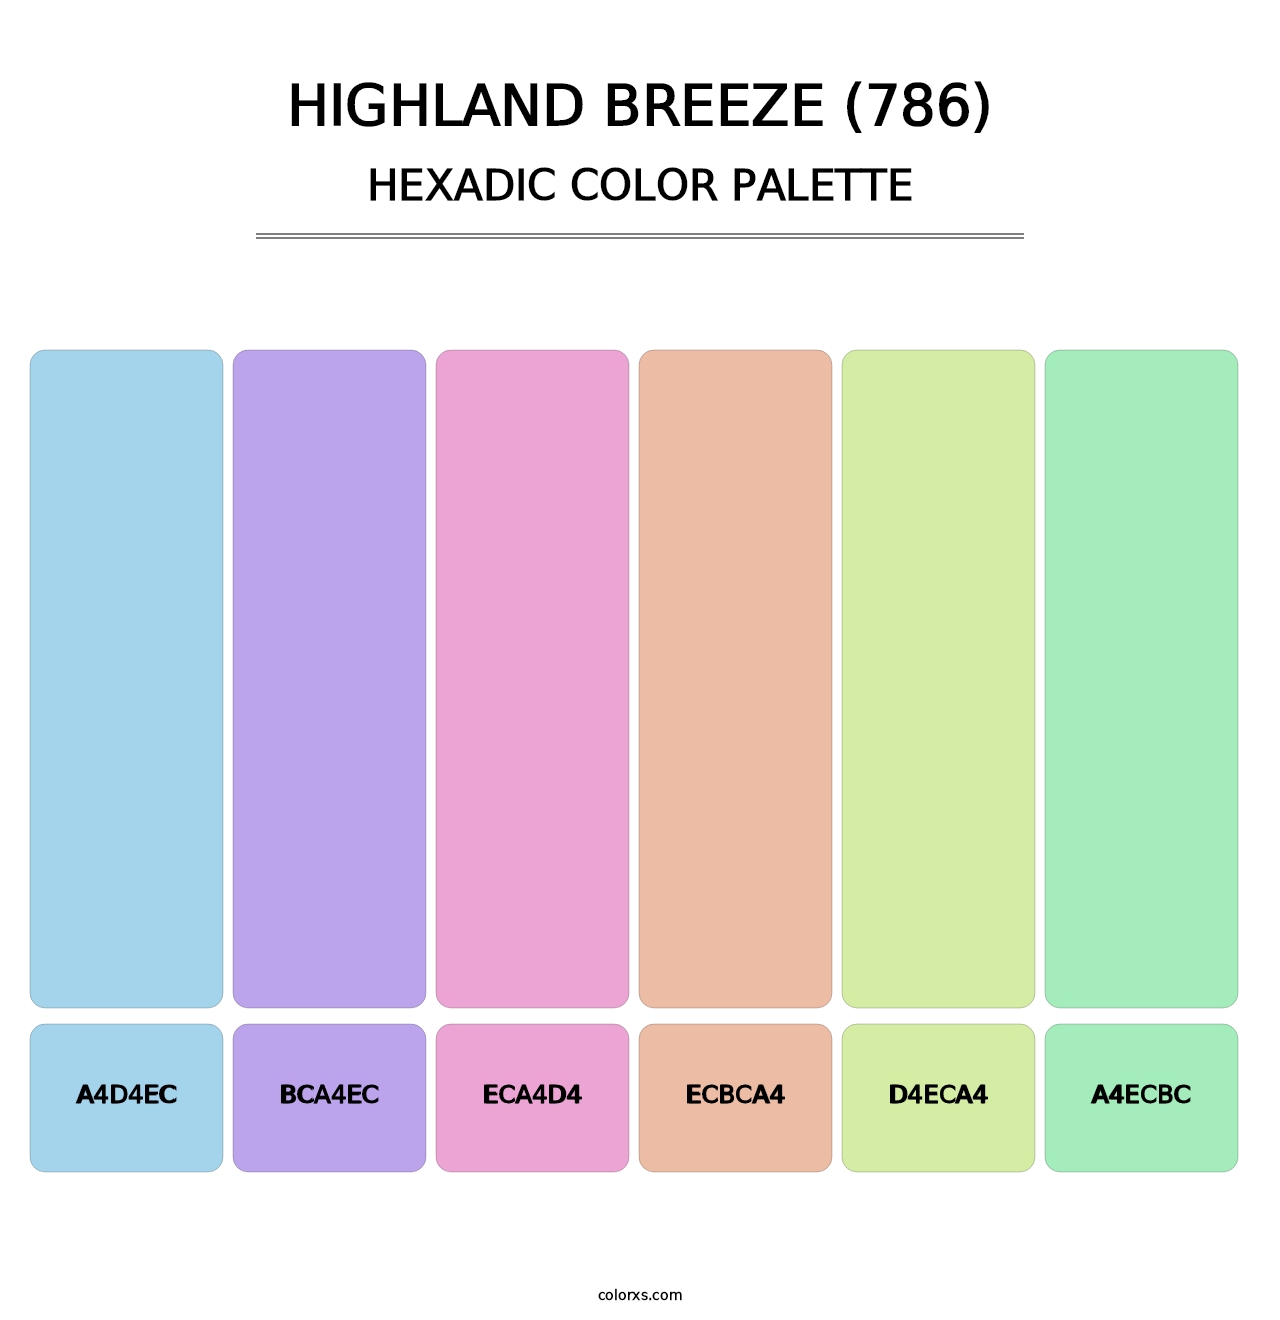 Highland Breeze (786) - Hexadic Color Palette